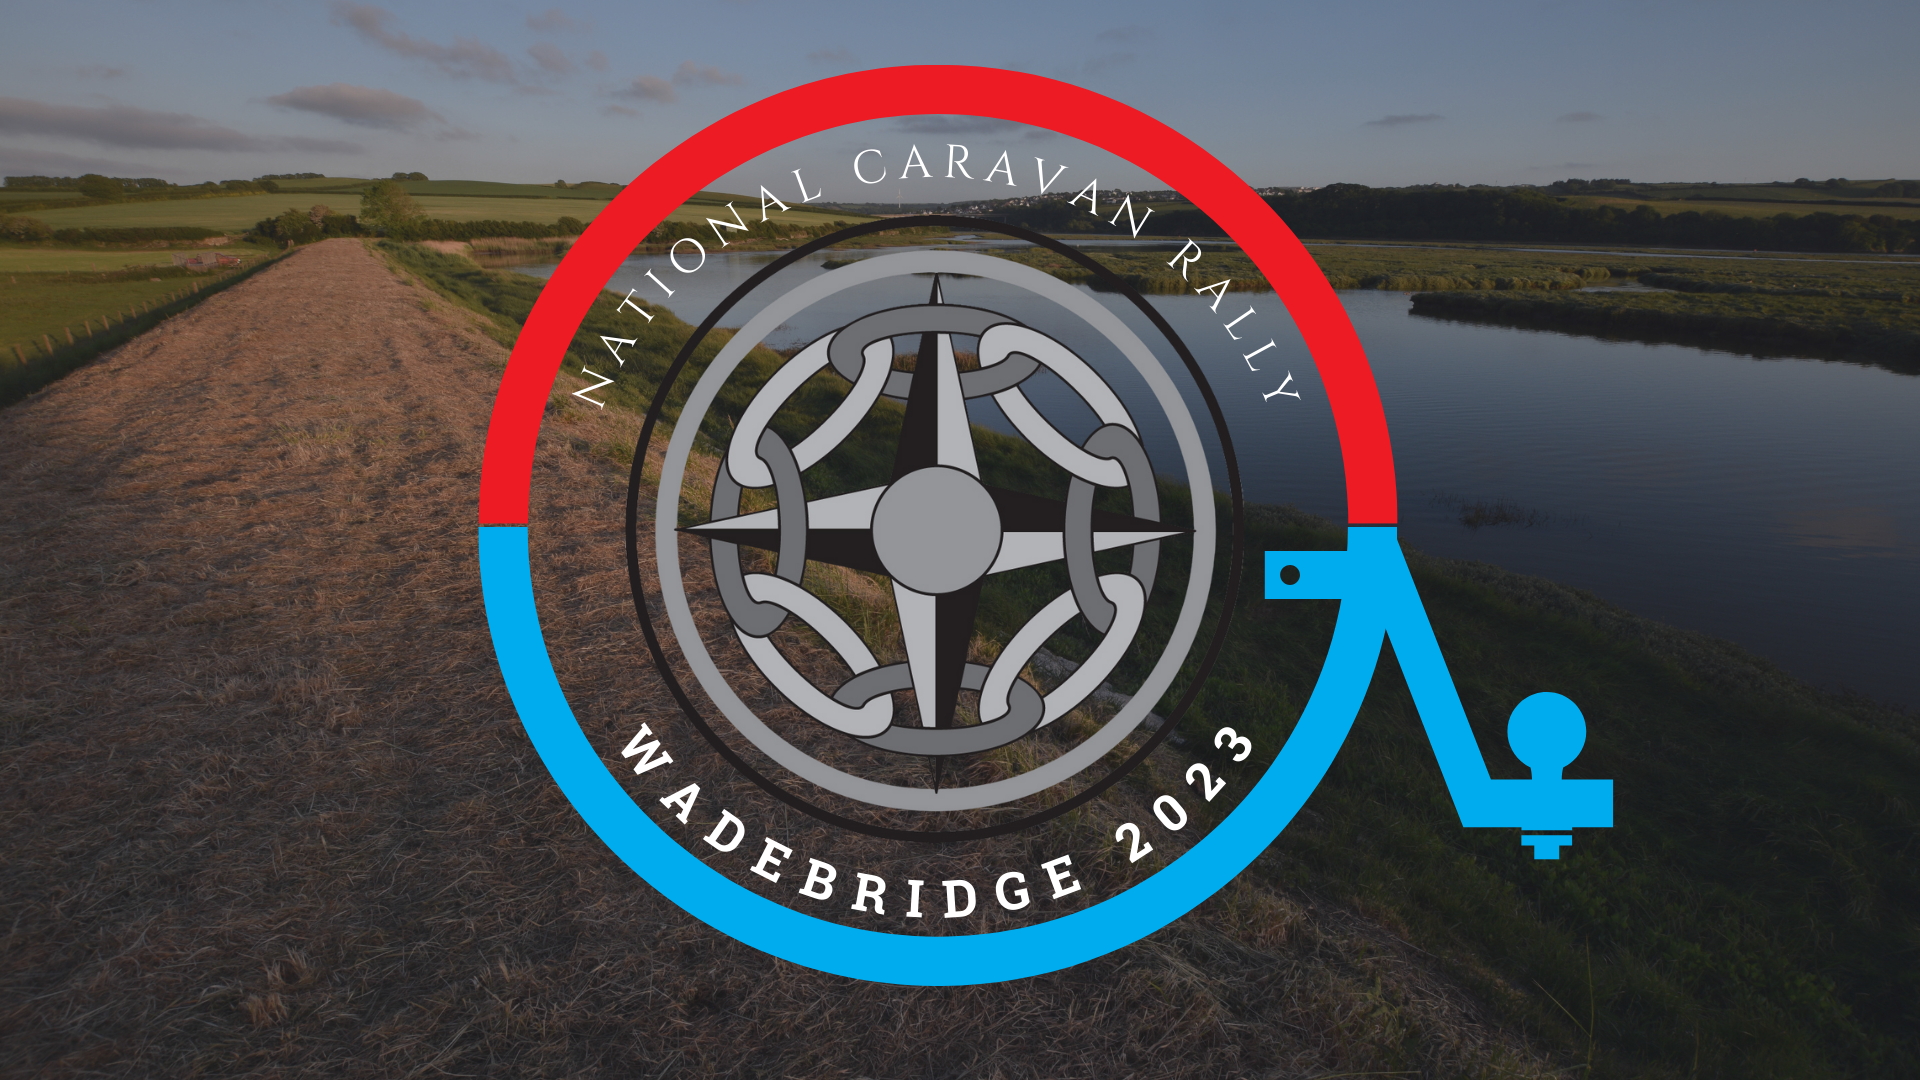 Caravan Rally Wadebridge